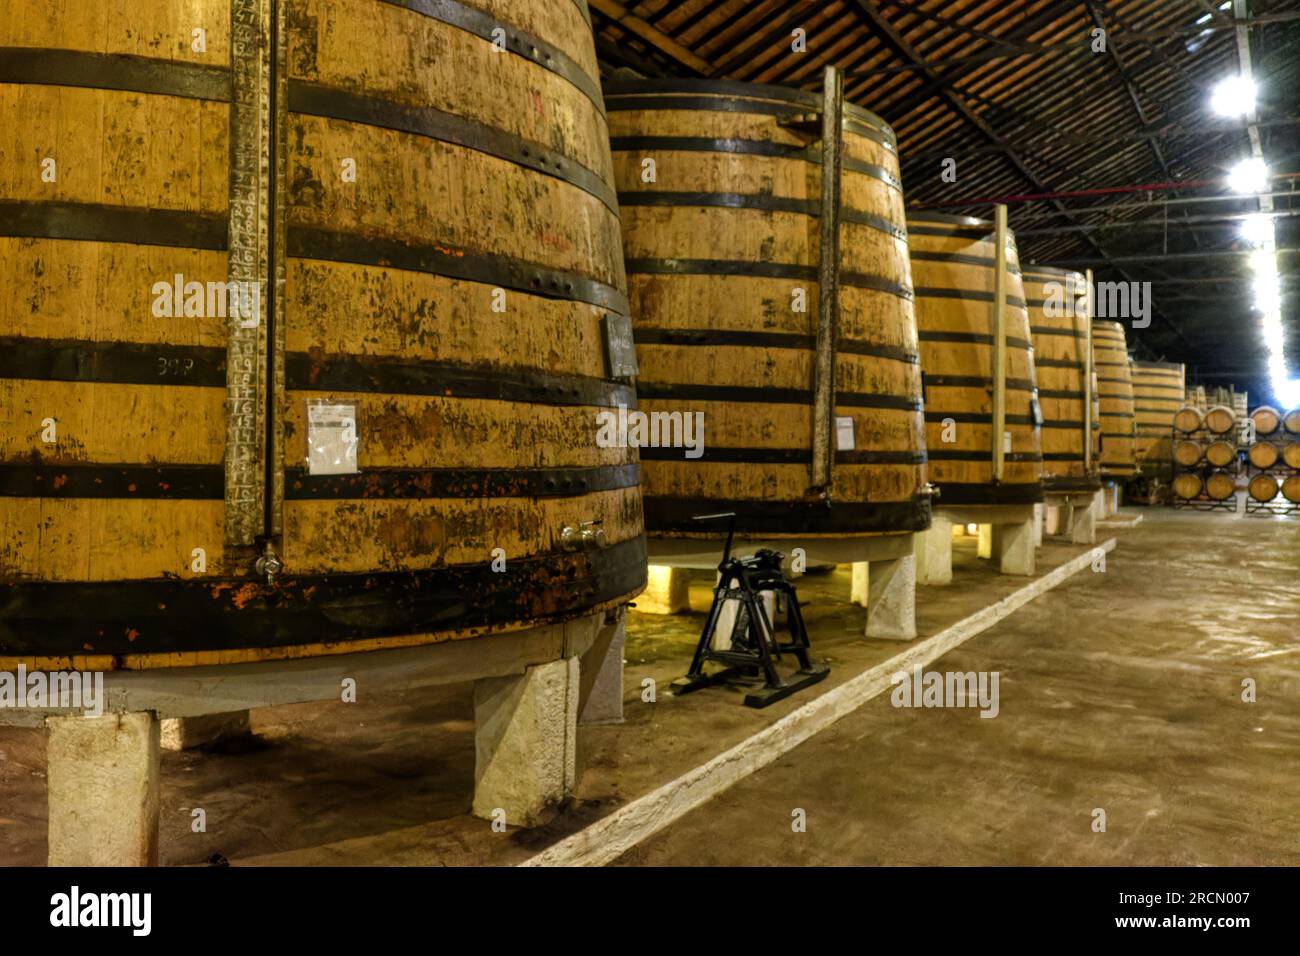 Real Companhia Velha, casks of port wine in production. Porto, Portugal Stock Photo